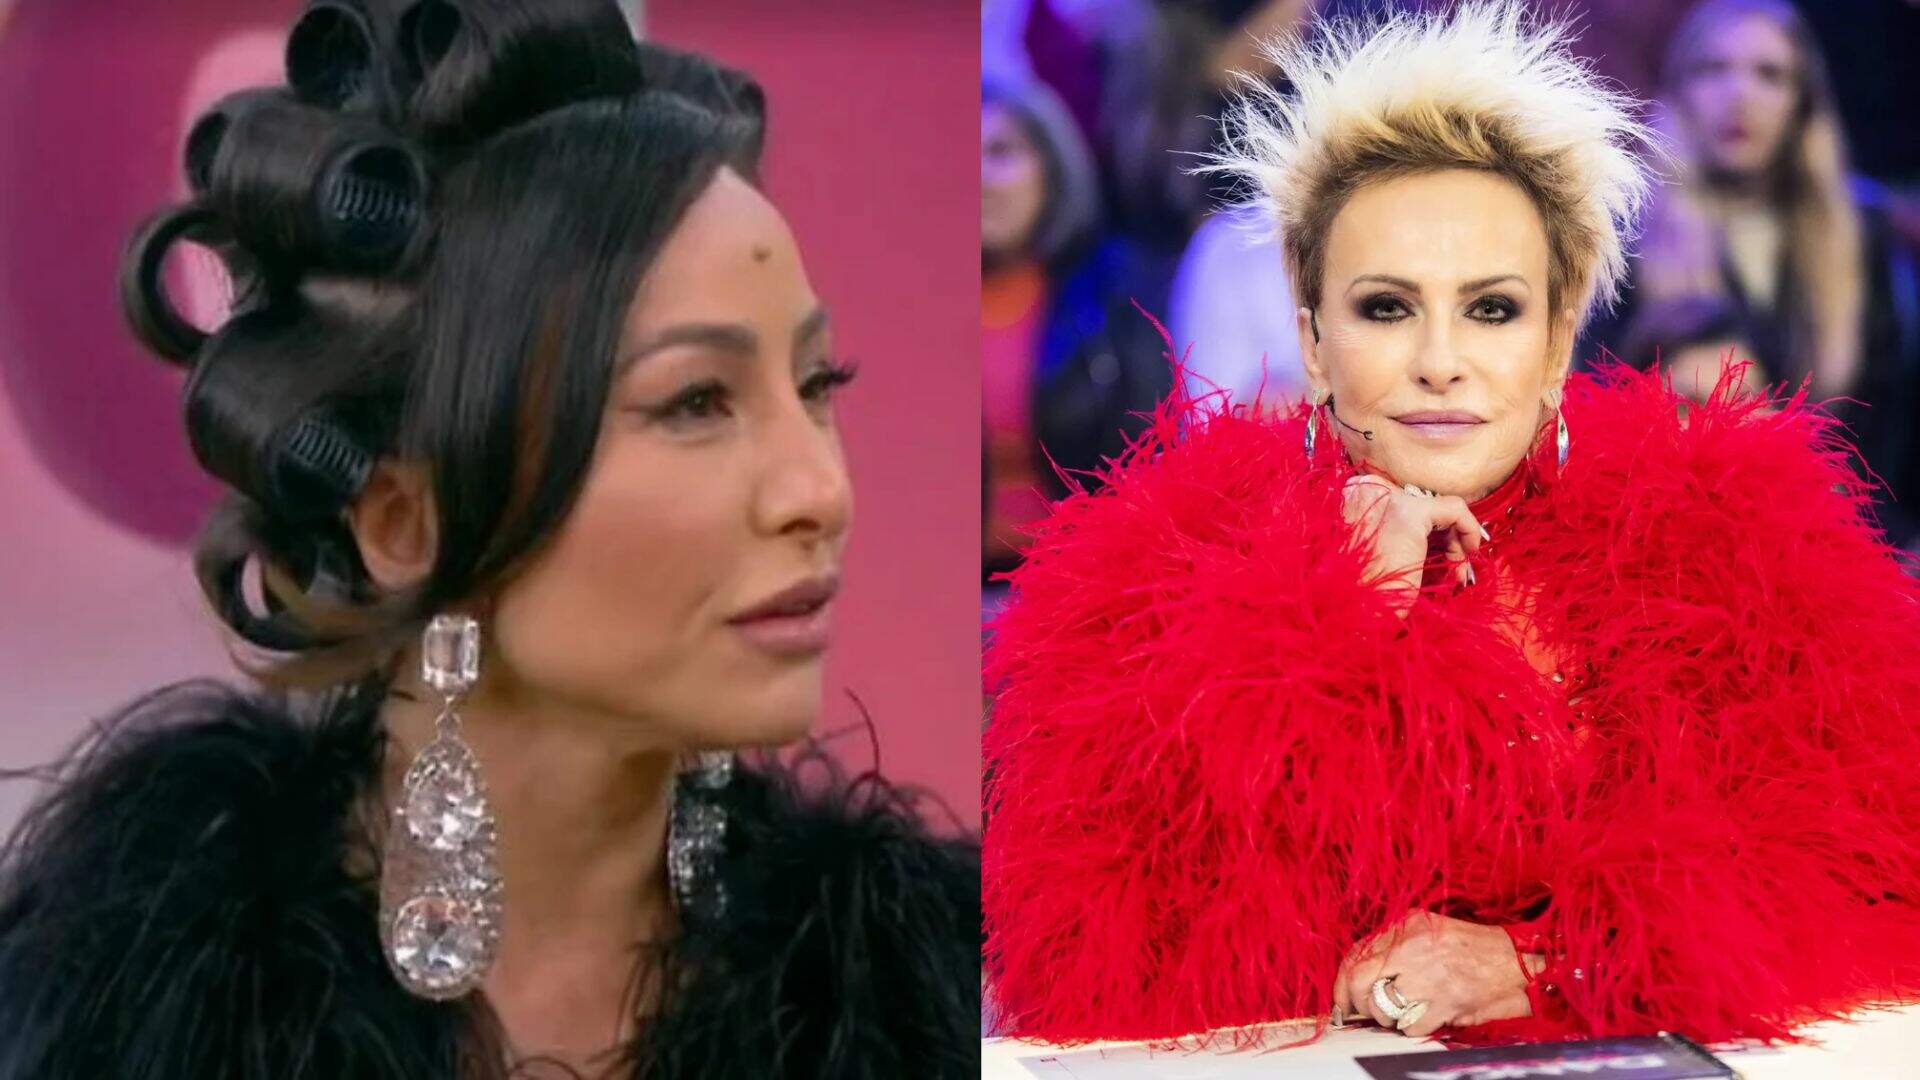 Ao vivo, Ana Maria Braga ironiza roupa inusitada de Sabrina: “Achei que fosse se arrumar” - Metropolitana FM